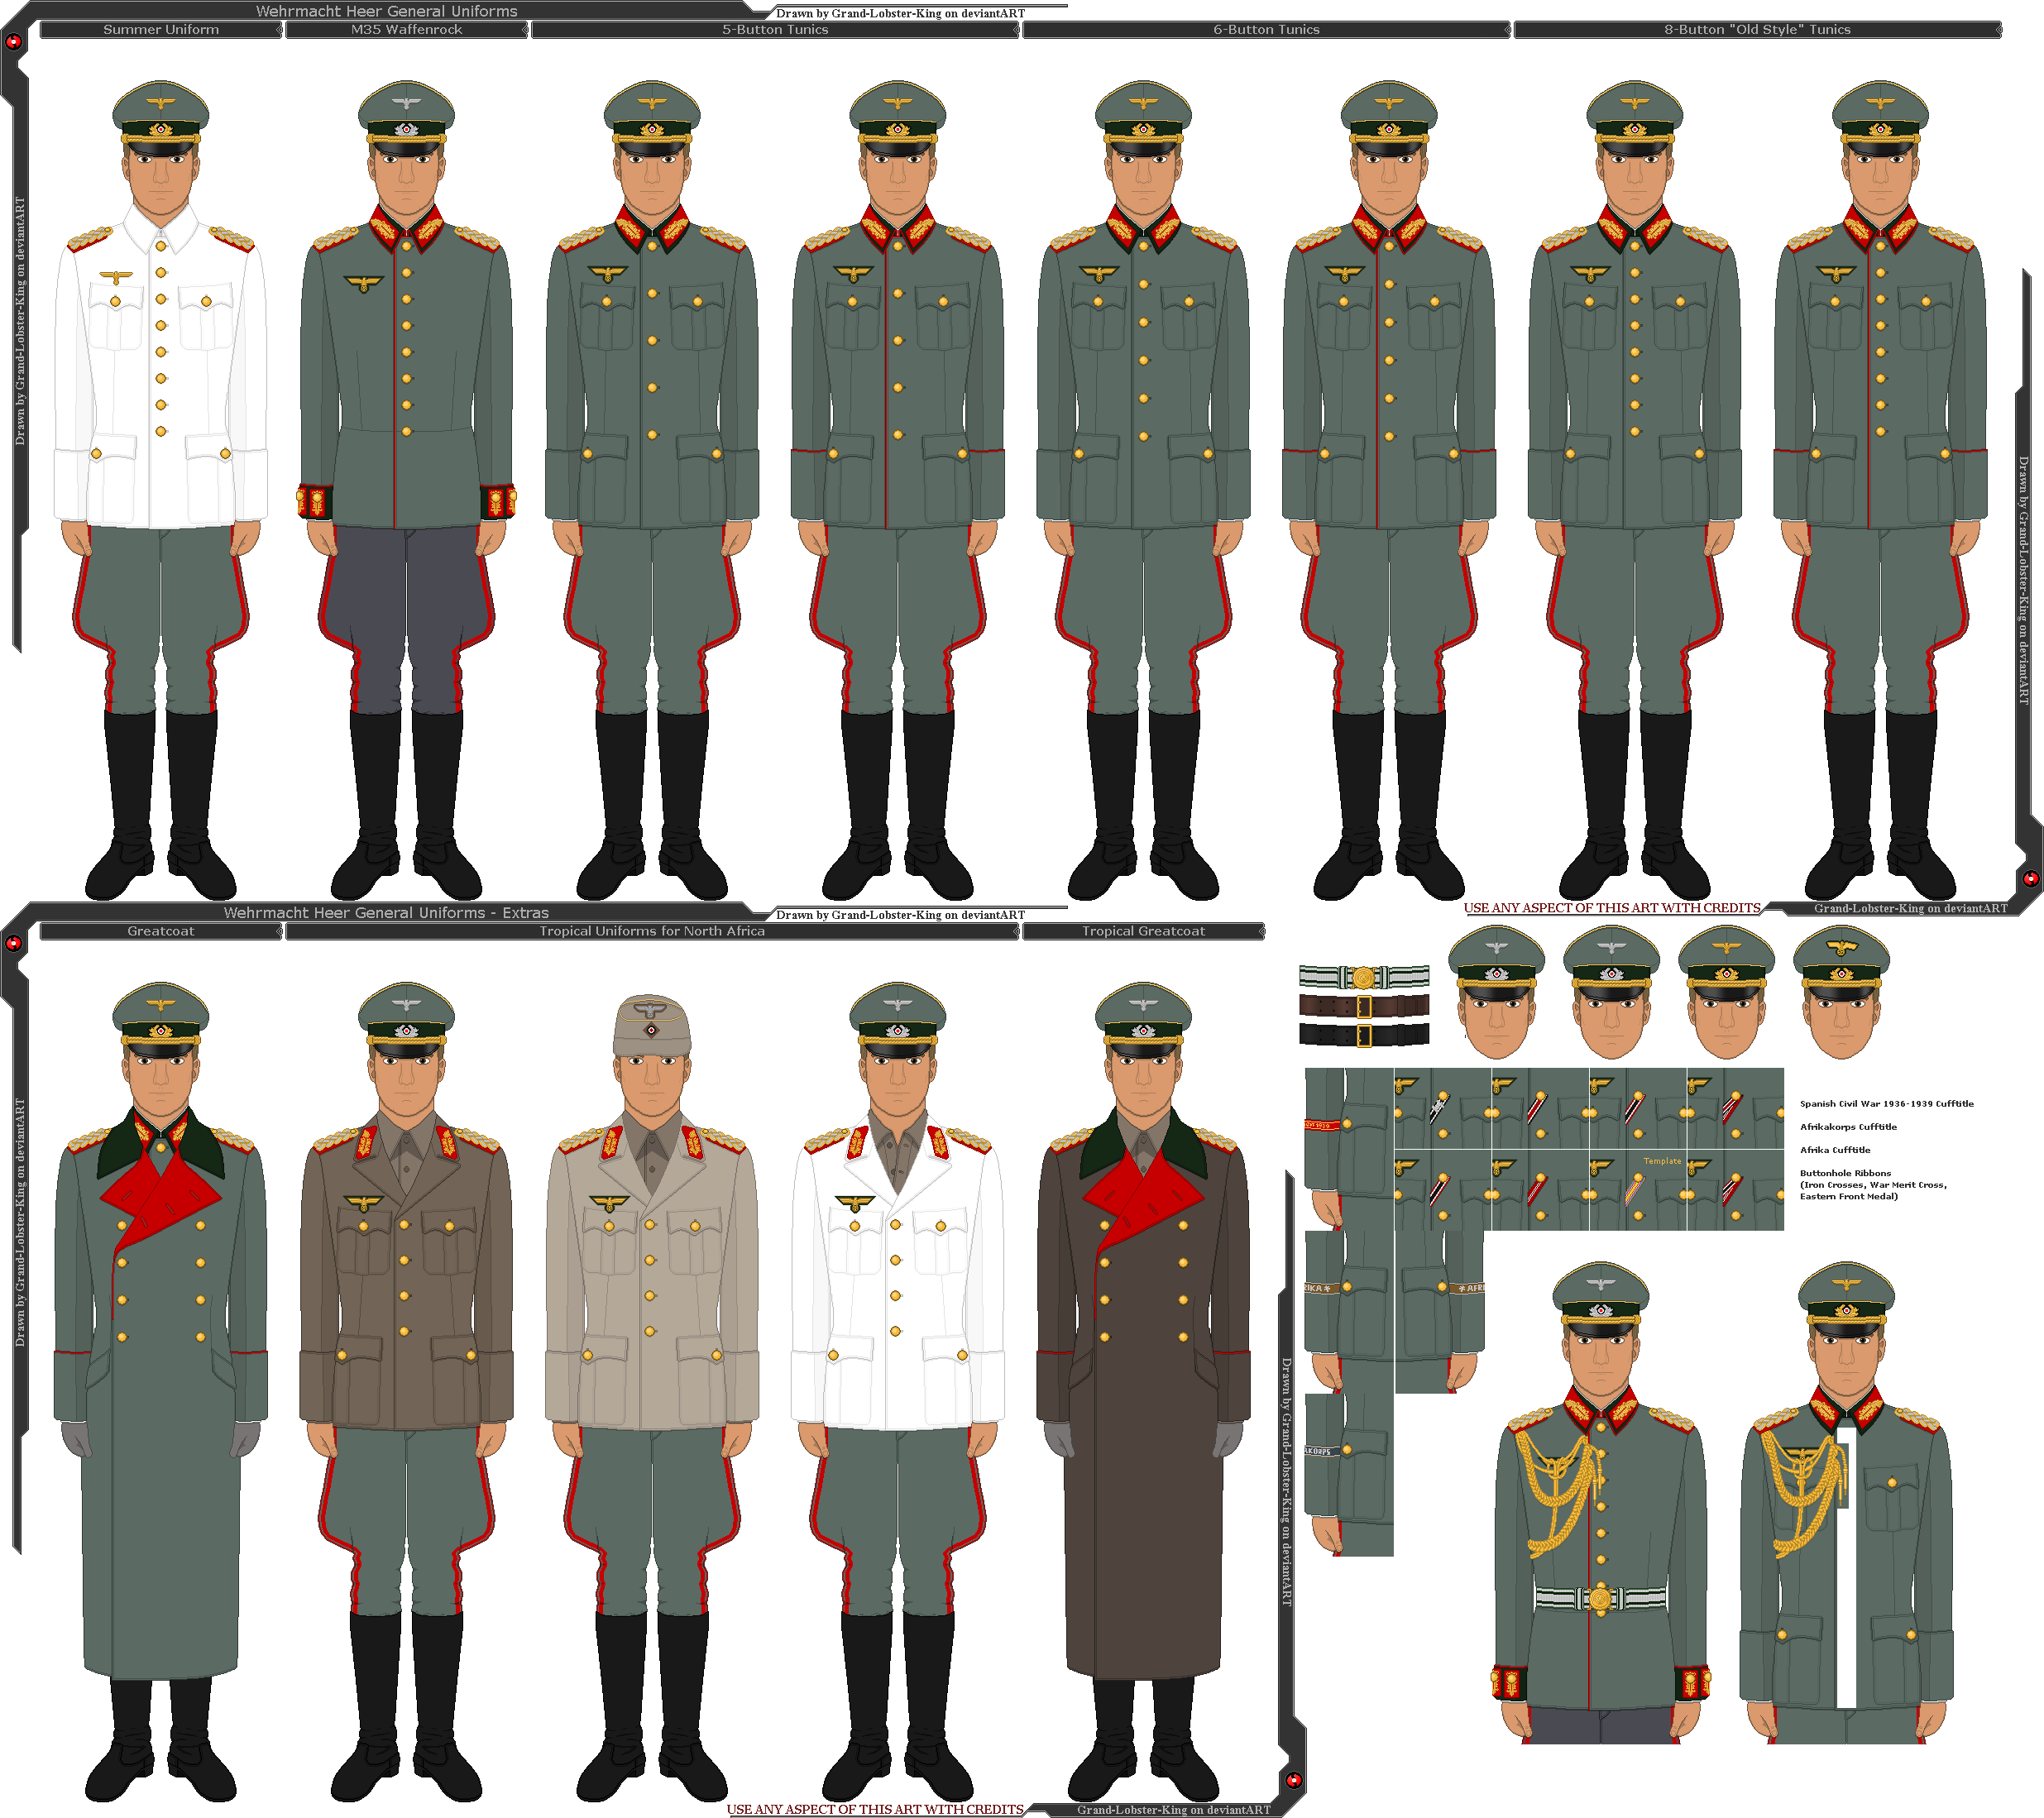 wehrmacht-heer-general-uniforms-by-grand-lobster-king-on-deviantart